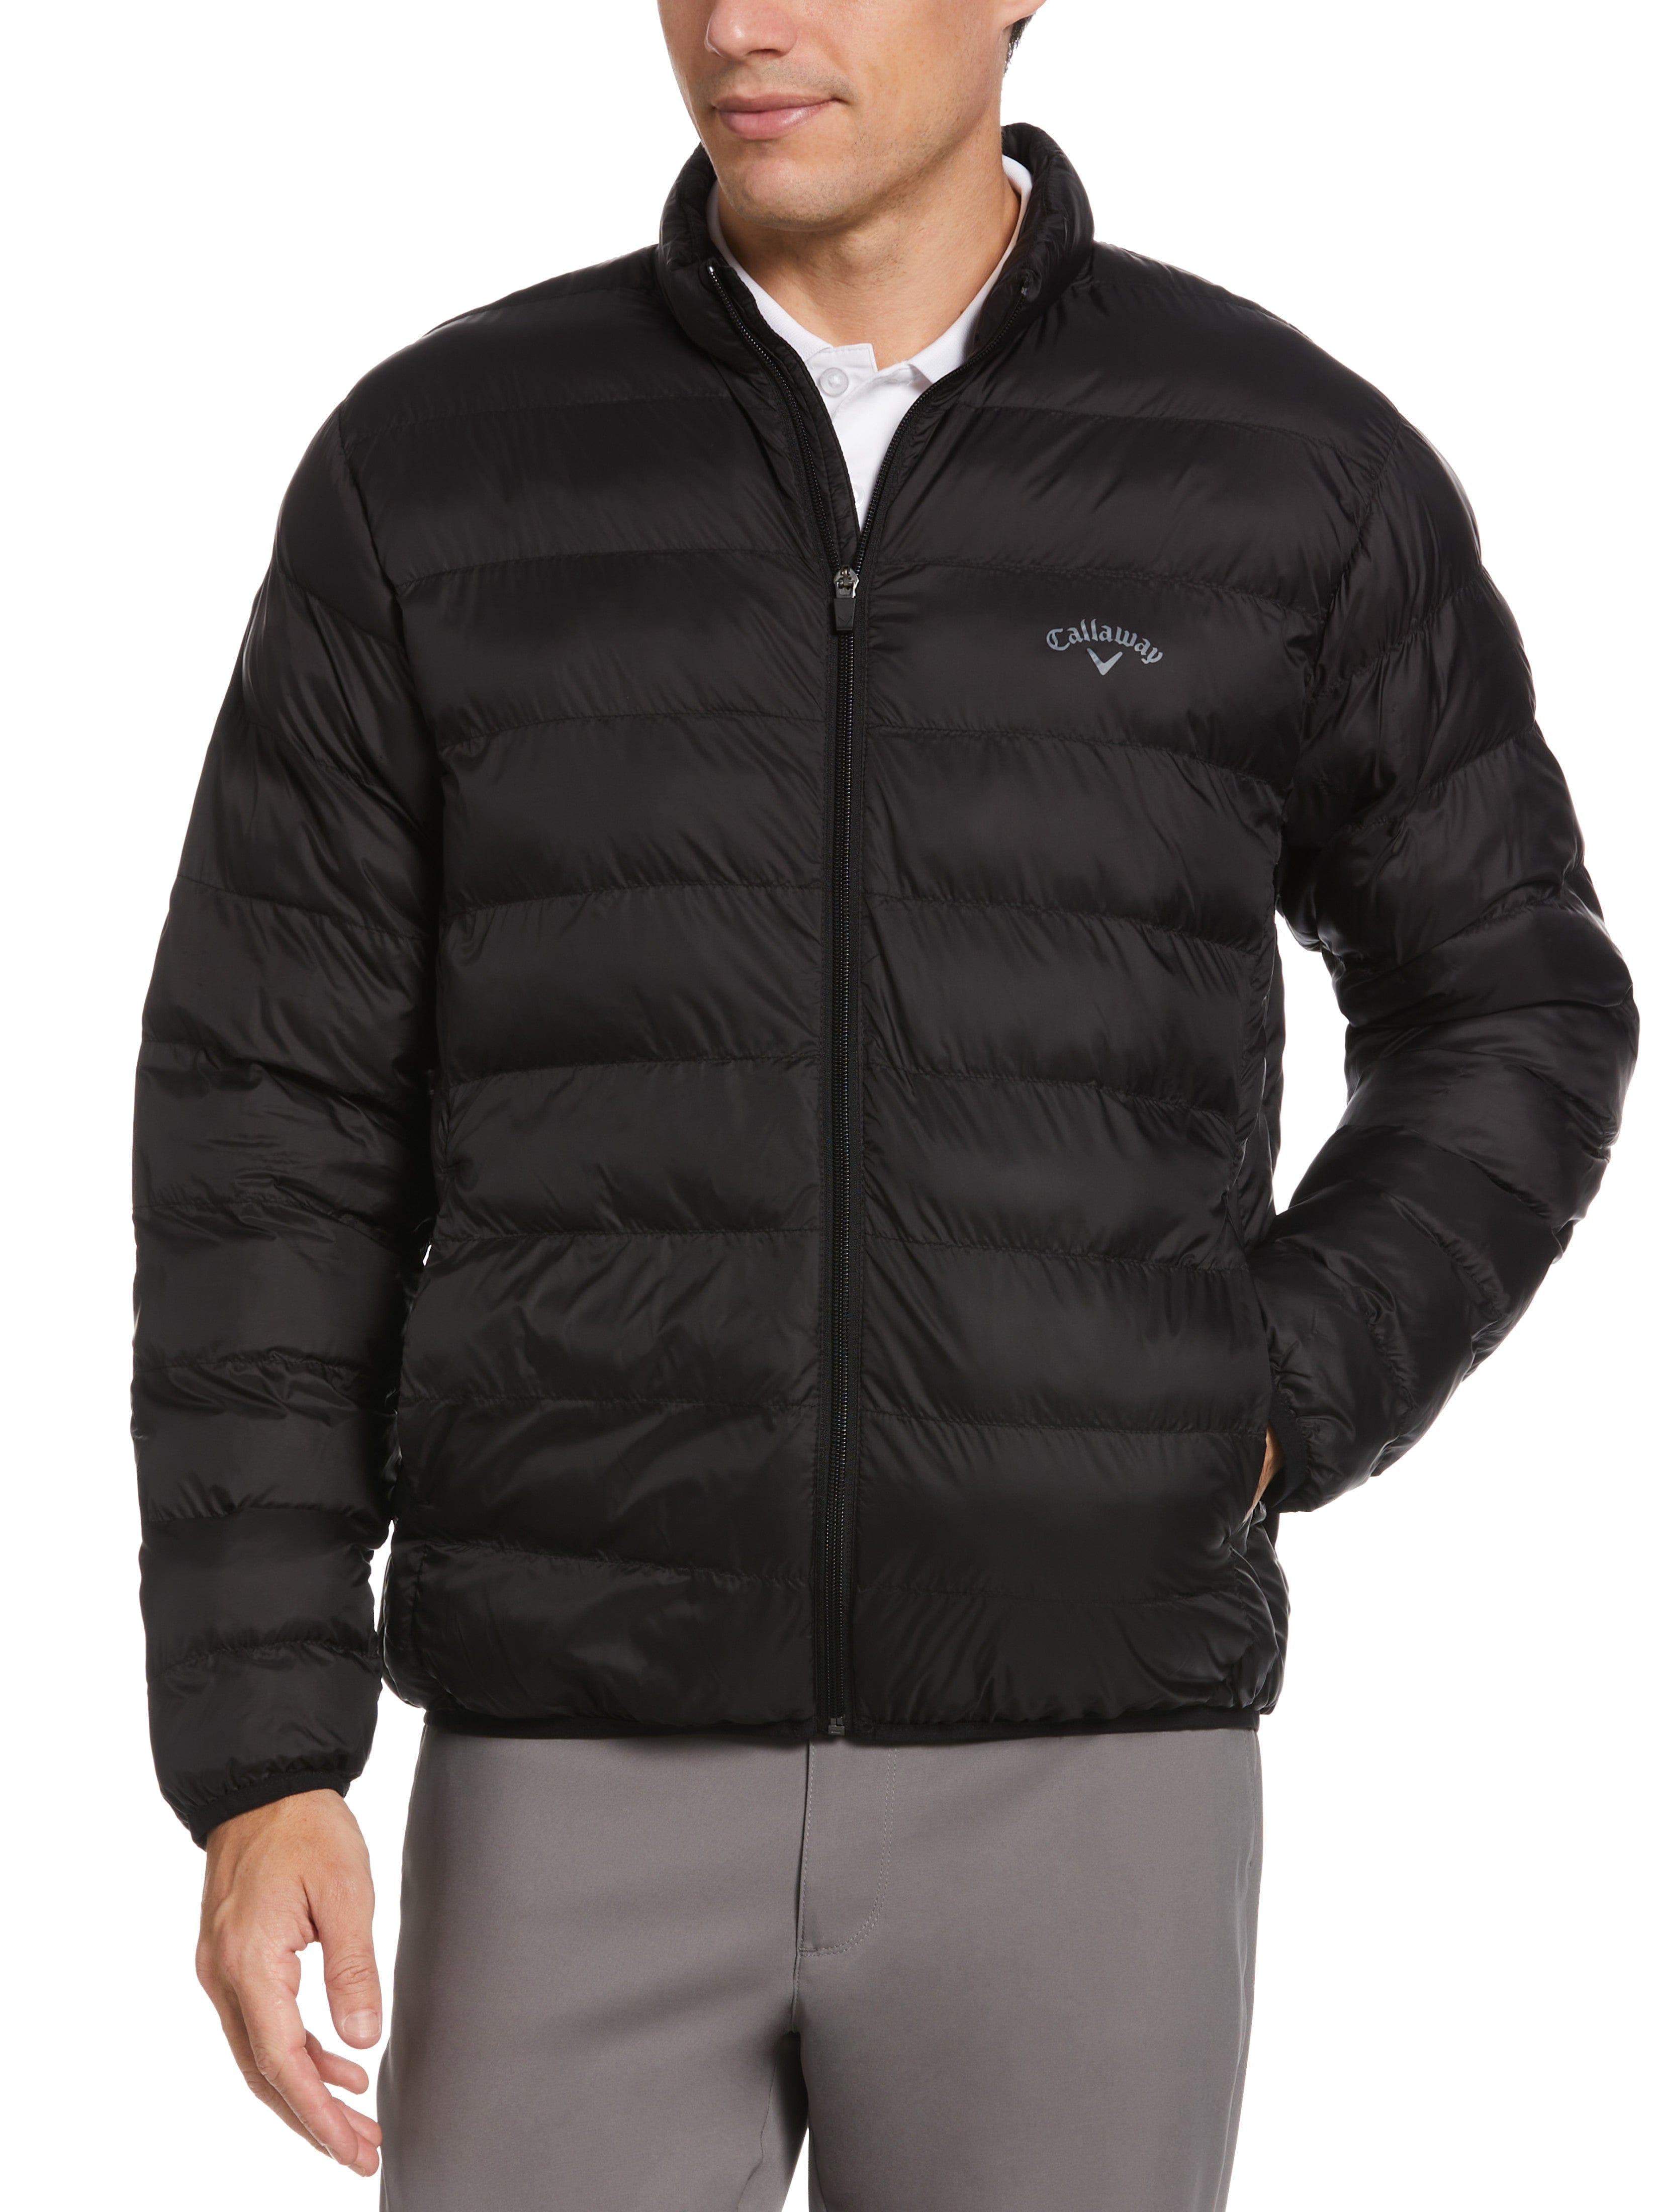 Callaway Apparel Mens Puffer Jacket Top, Size 2XL, Black, 100% Nylon | Golf Apparel Shop